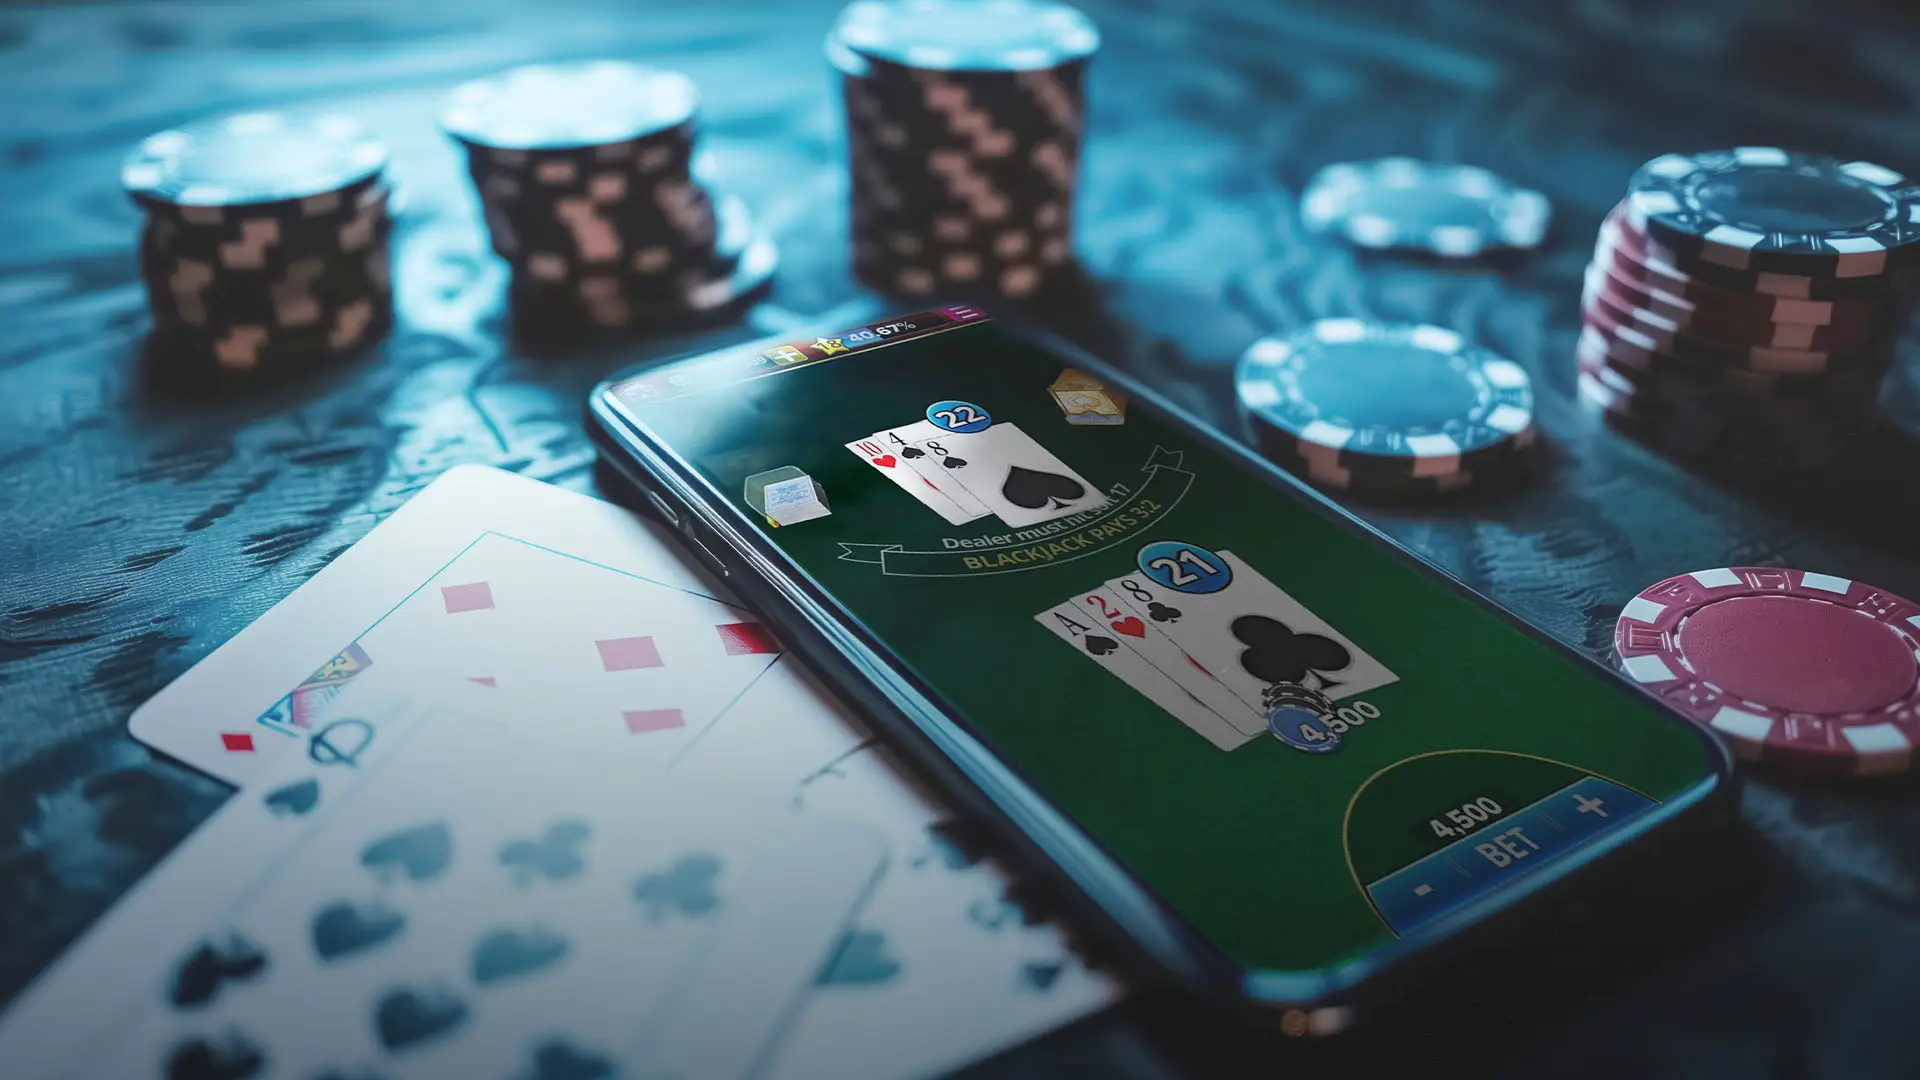 How To Play Mobile Blackjack